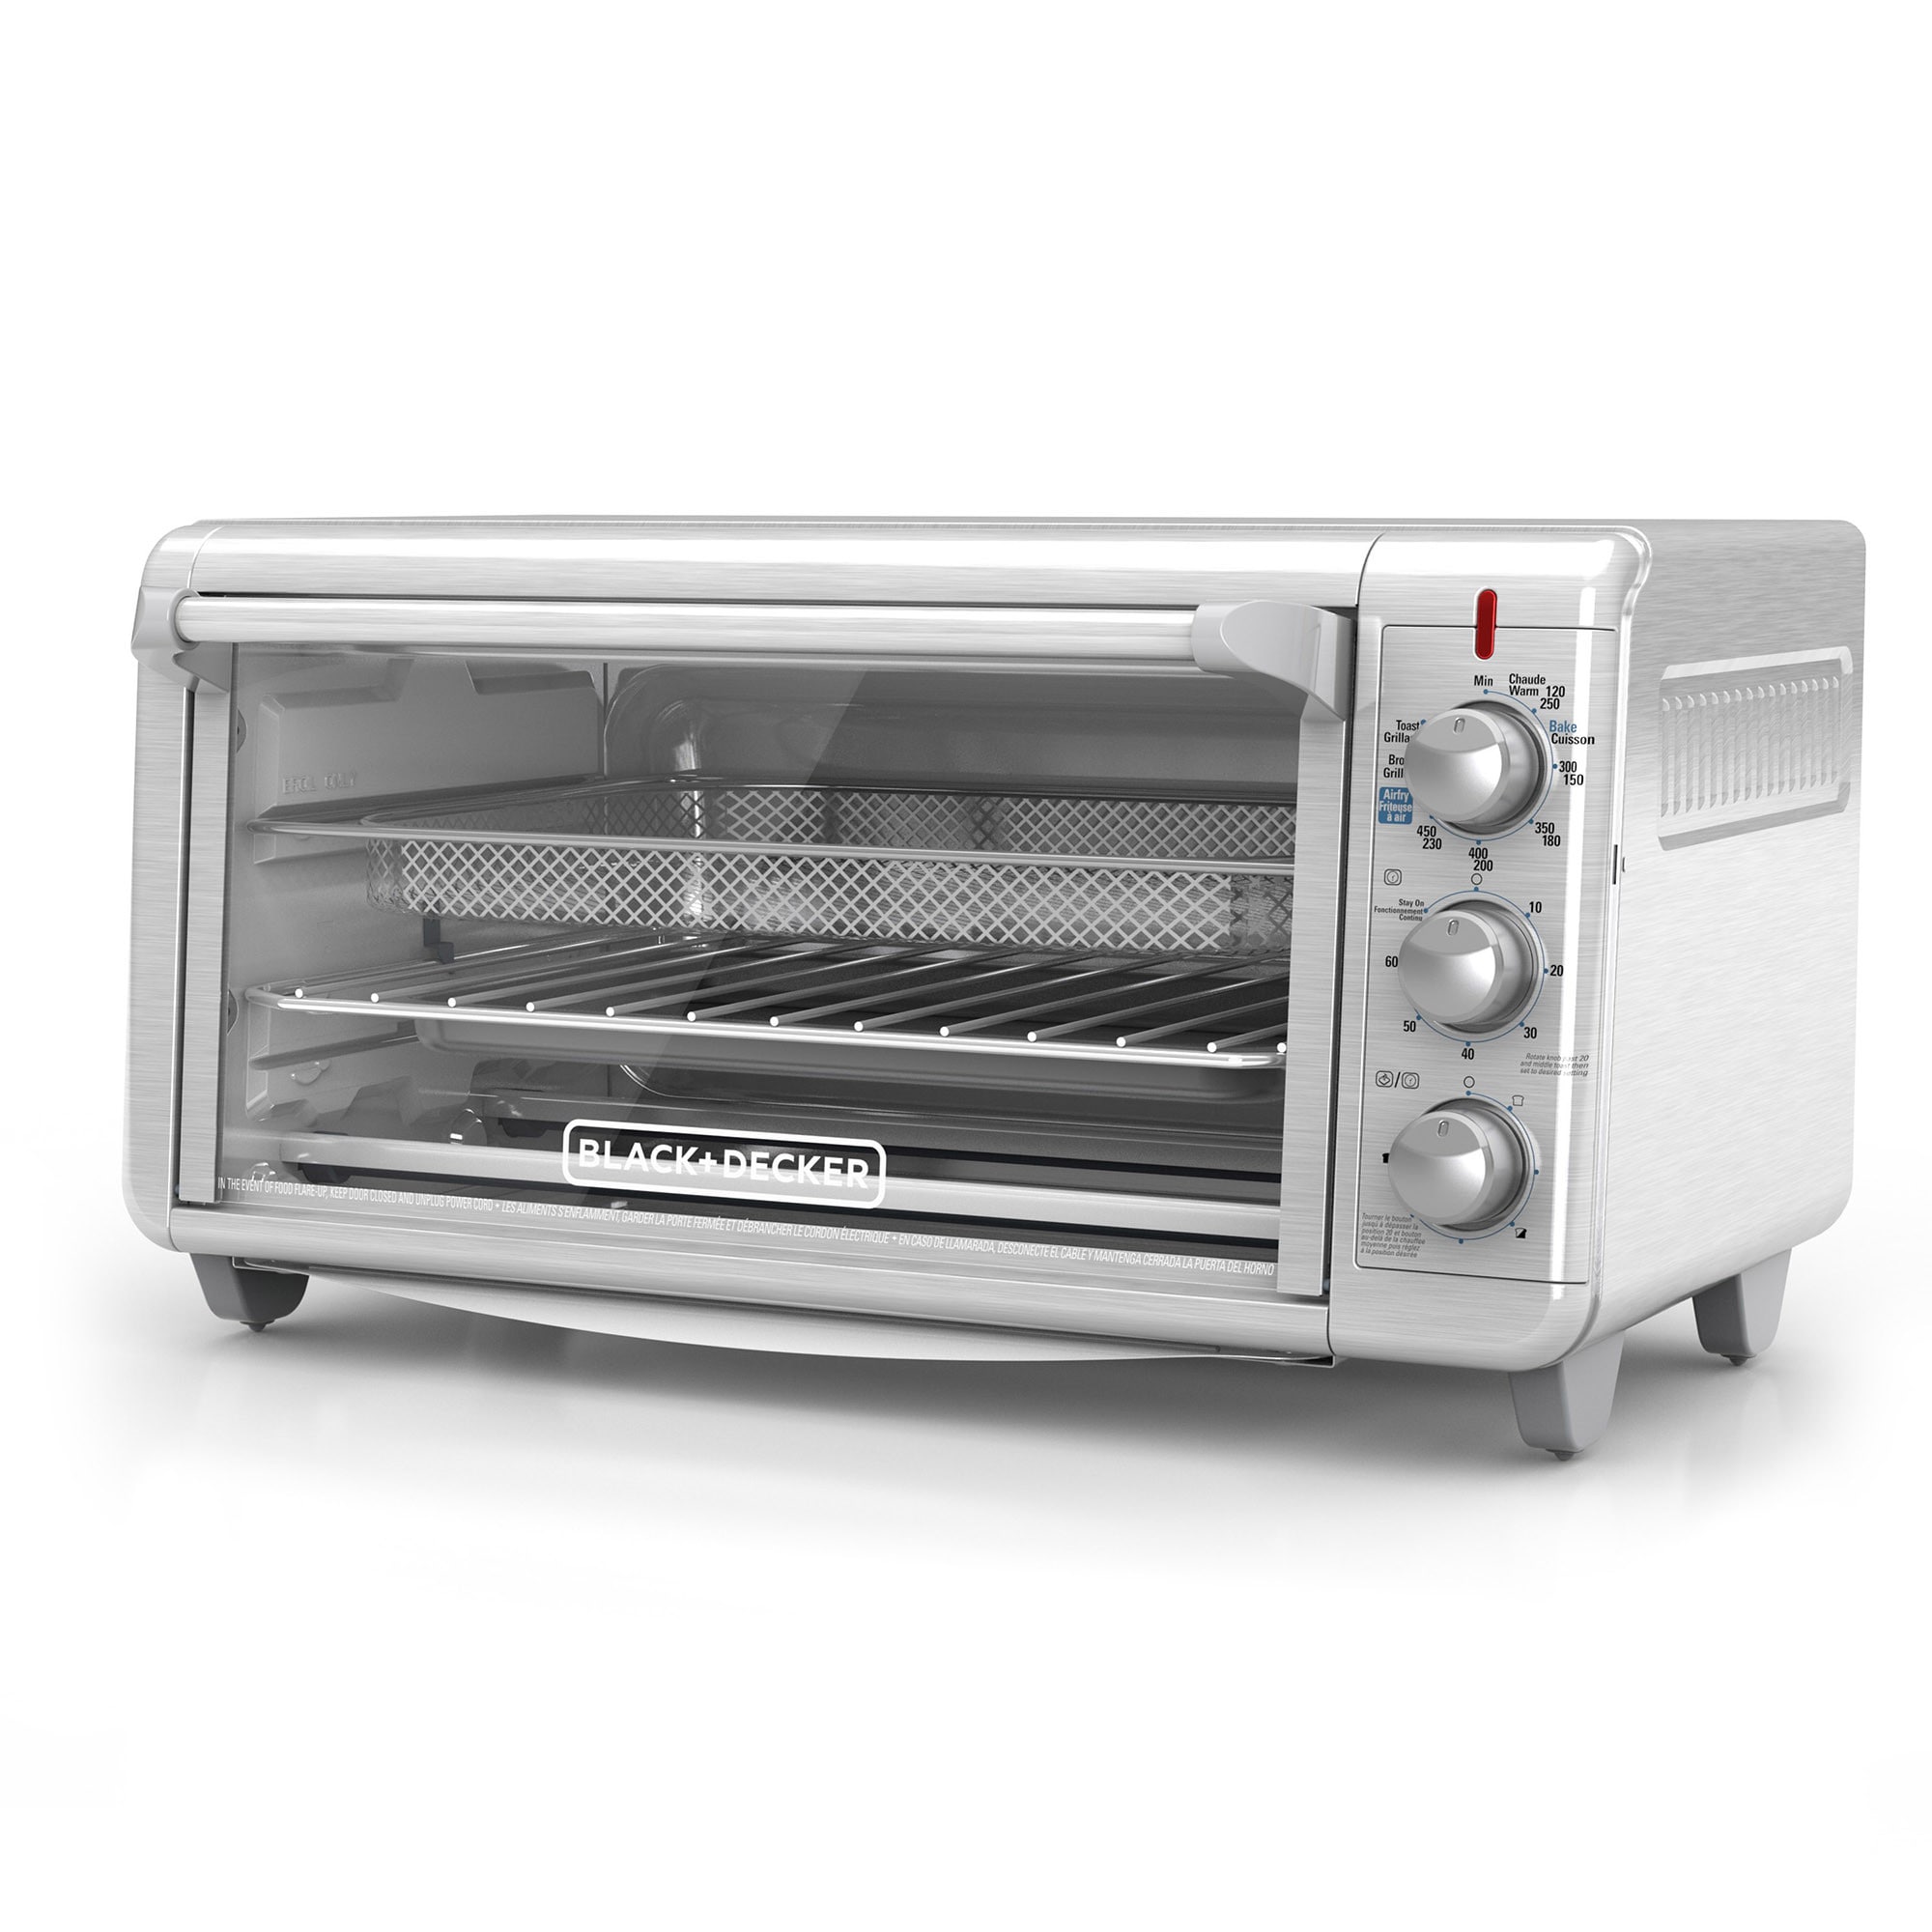 Convection Toaster Oven Black Countertop Rack Pan Pizza Bake Broil Warm Counter